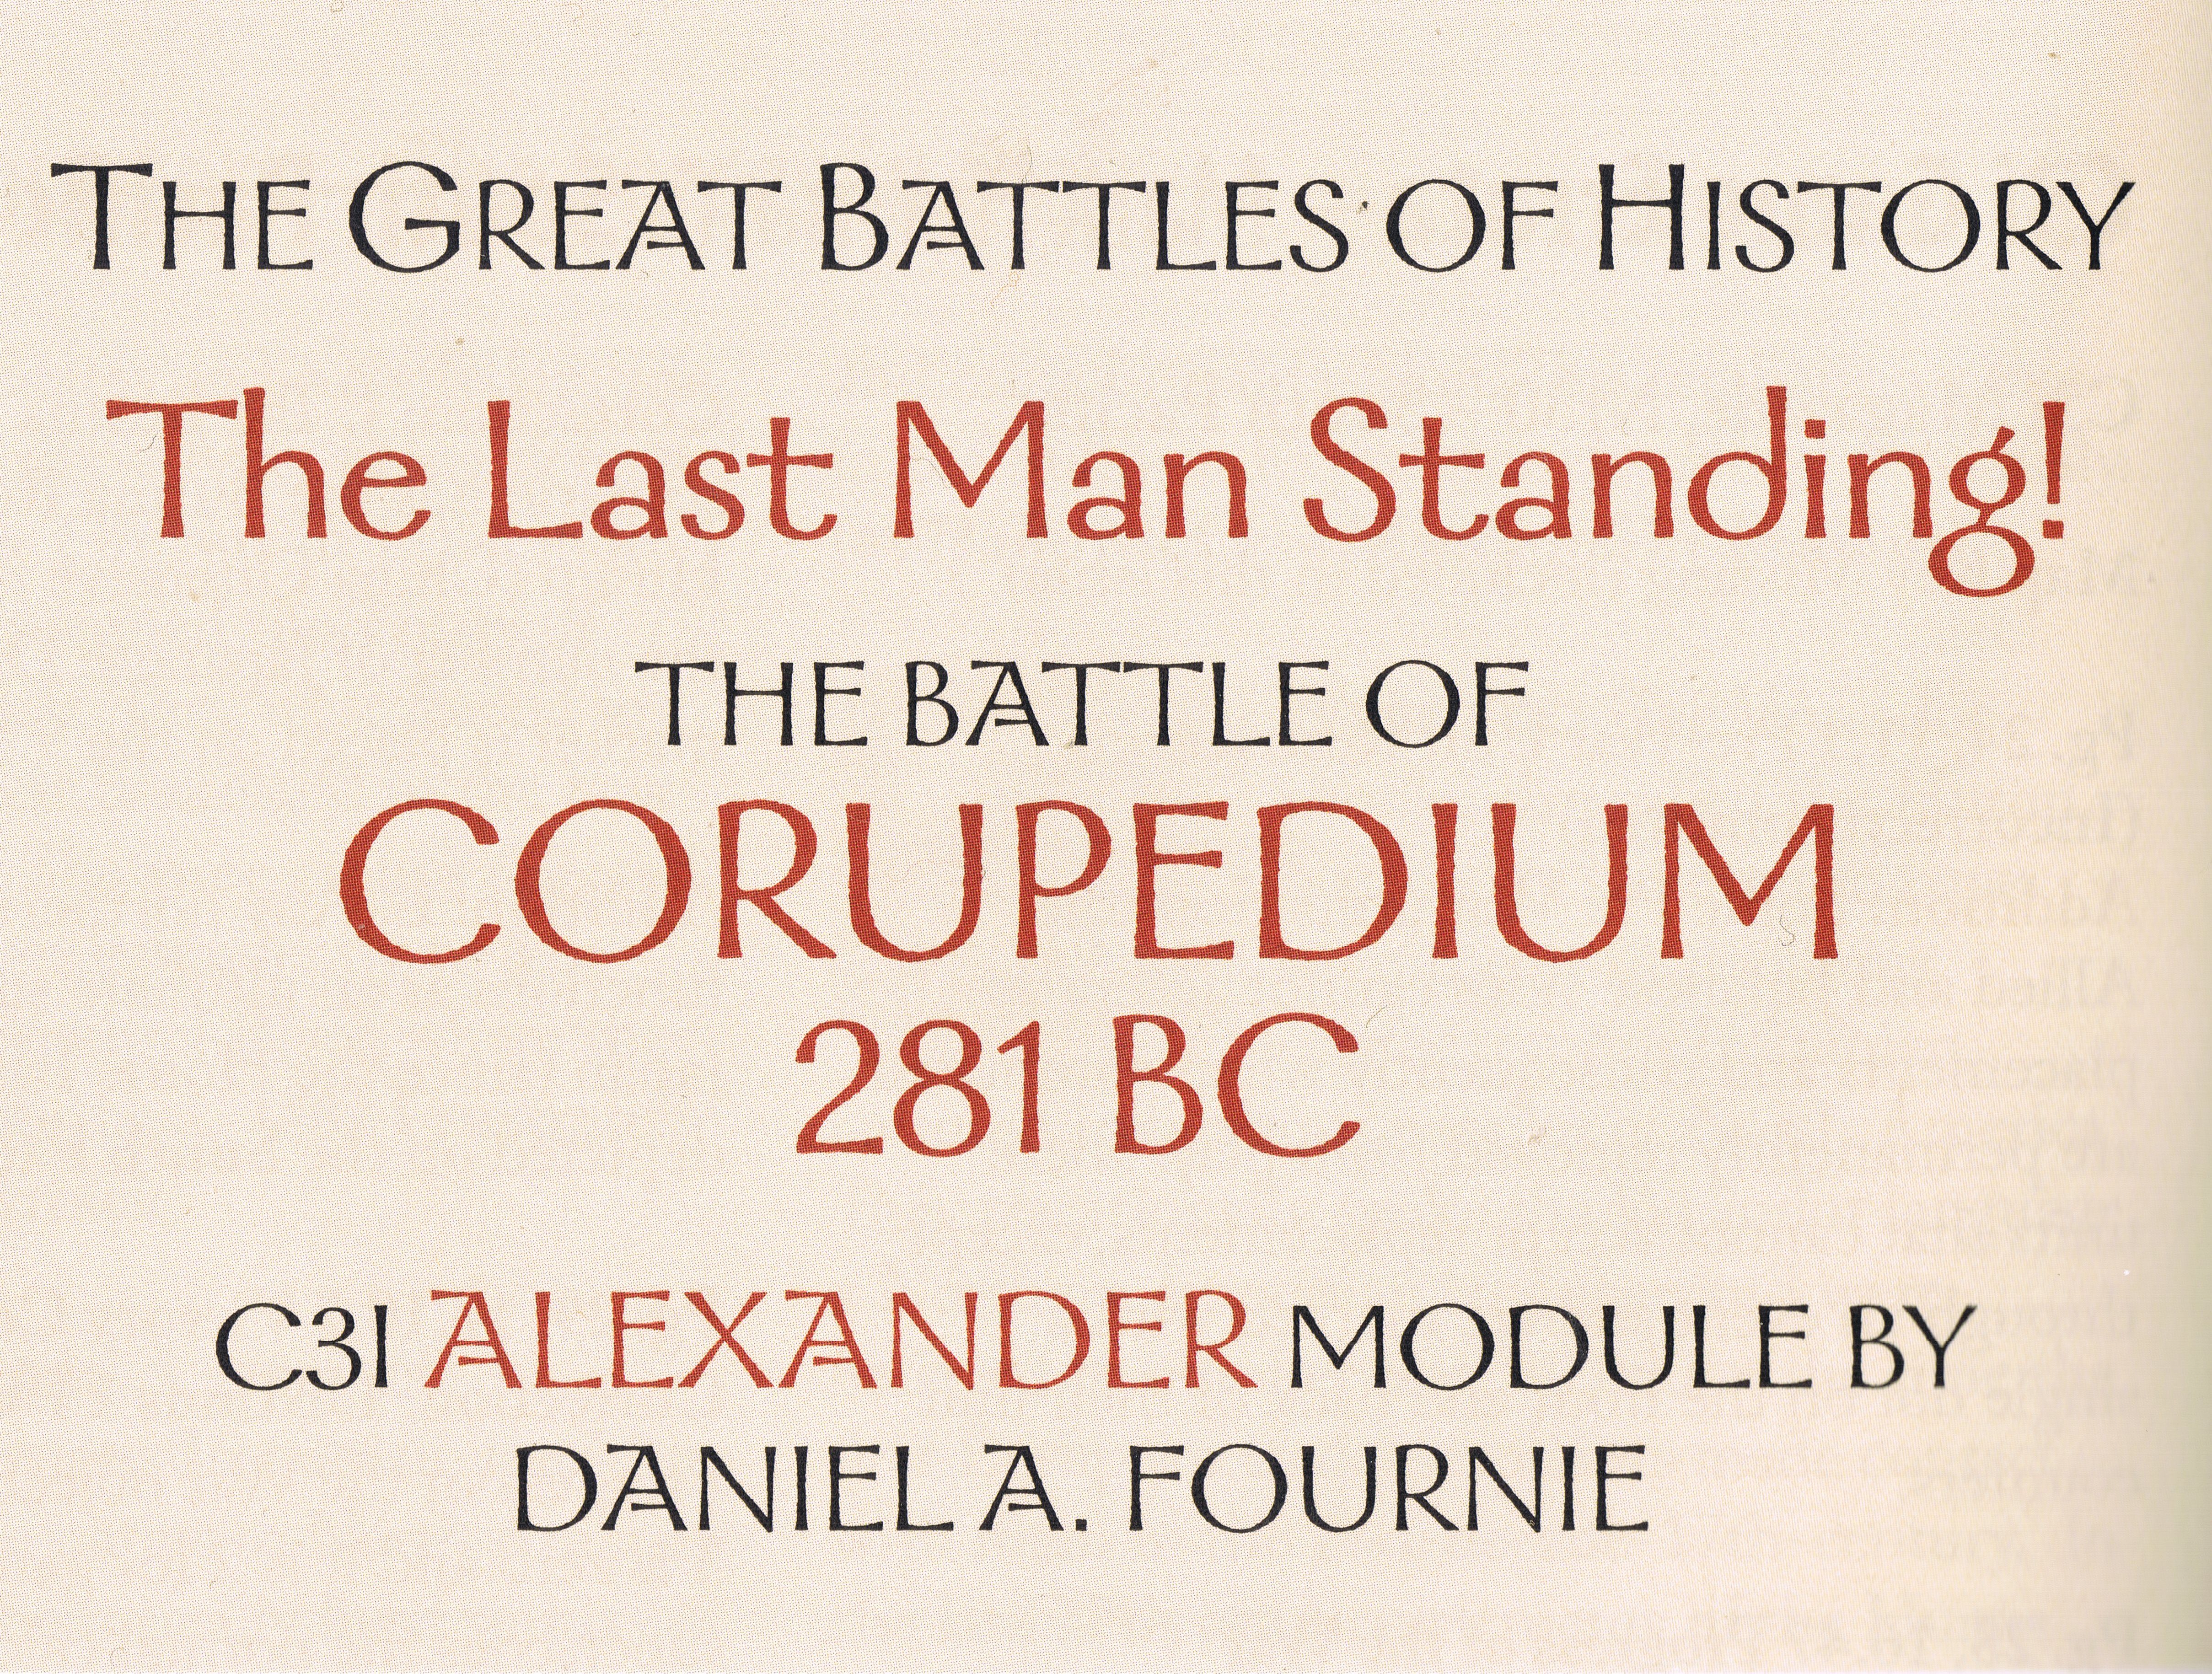 Alexander Battle Module: The Battle of Corupedium, 281 BC